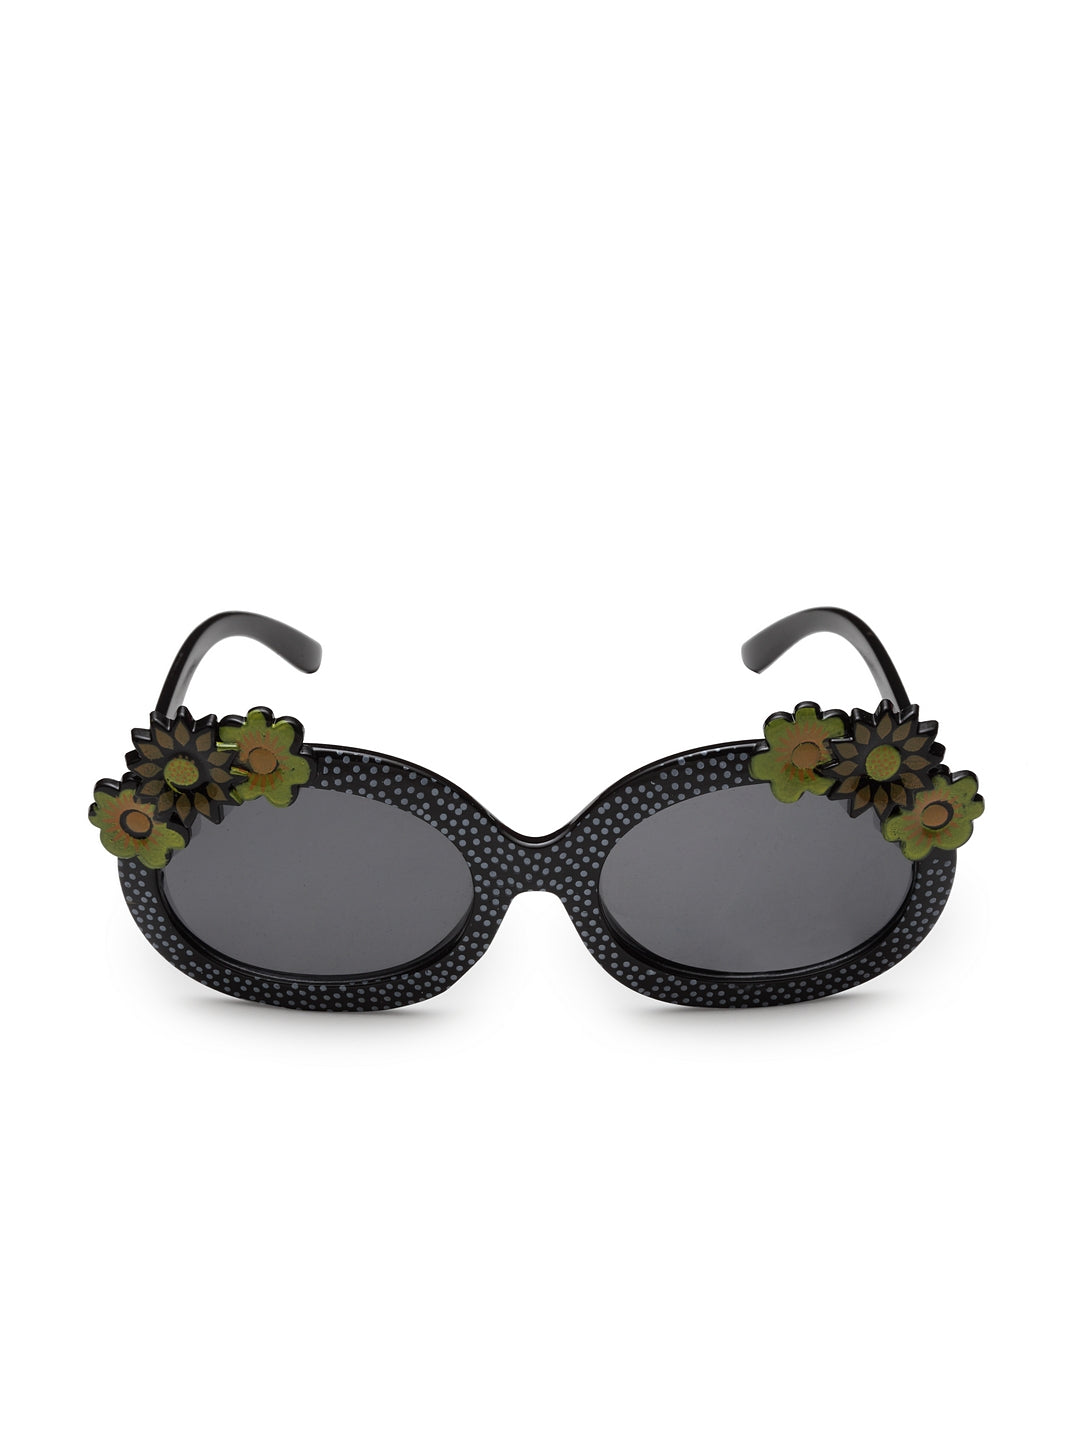 Stol'n Premium Attractive Fashionable UV-Protected Oval Shape Sunglasses  - Black